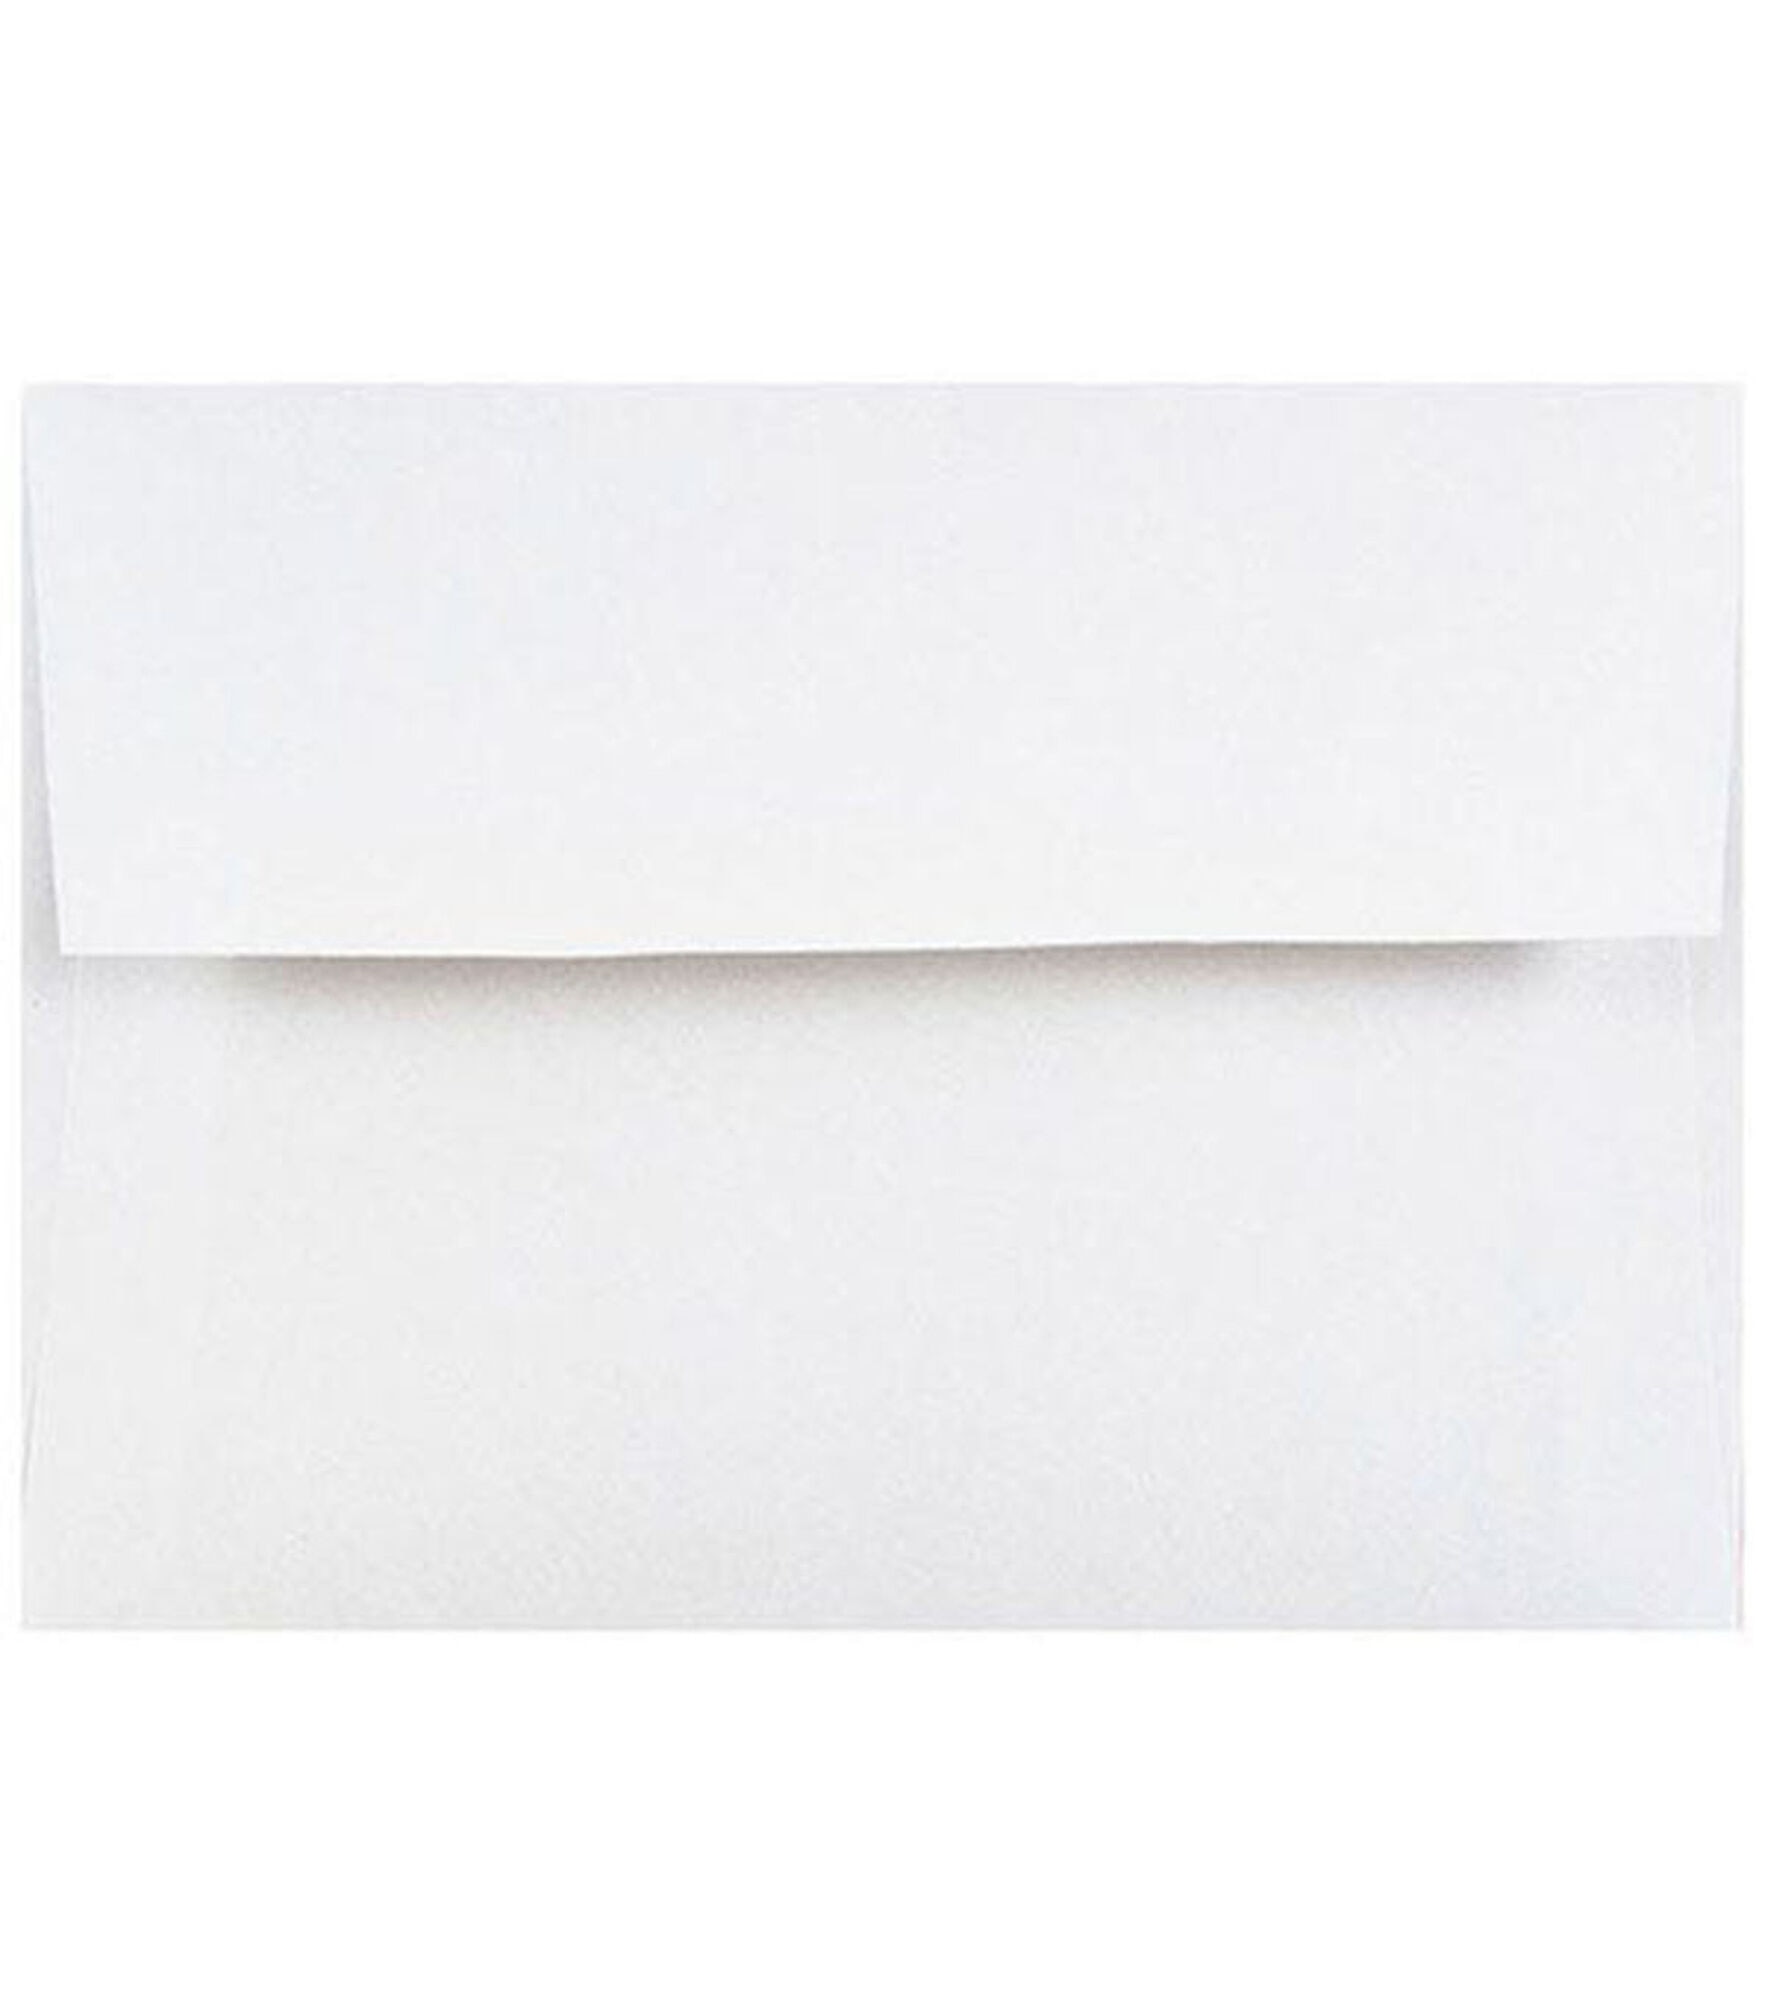 A4 Invitation Envelopes (4 1/4 x 6 1/4): Gold Foil-Lined, Peel